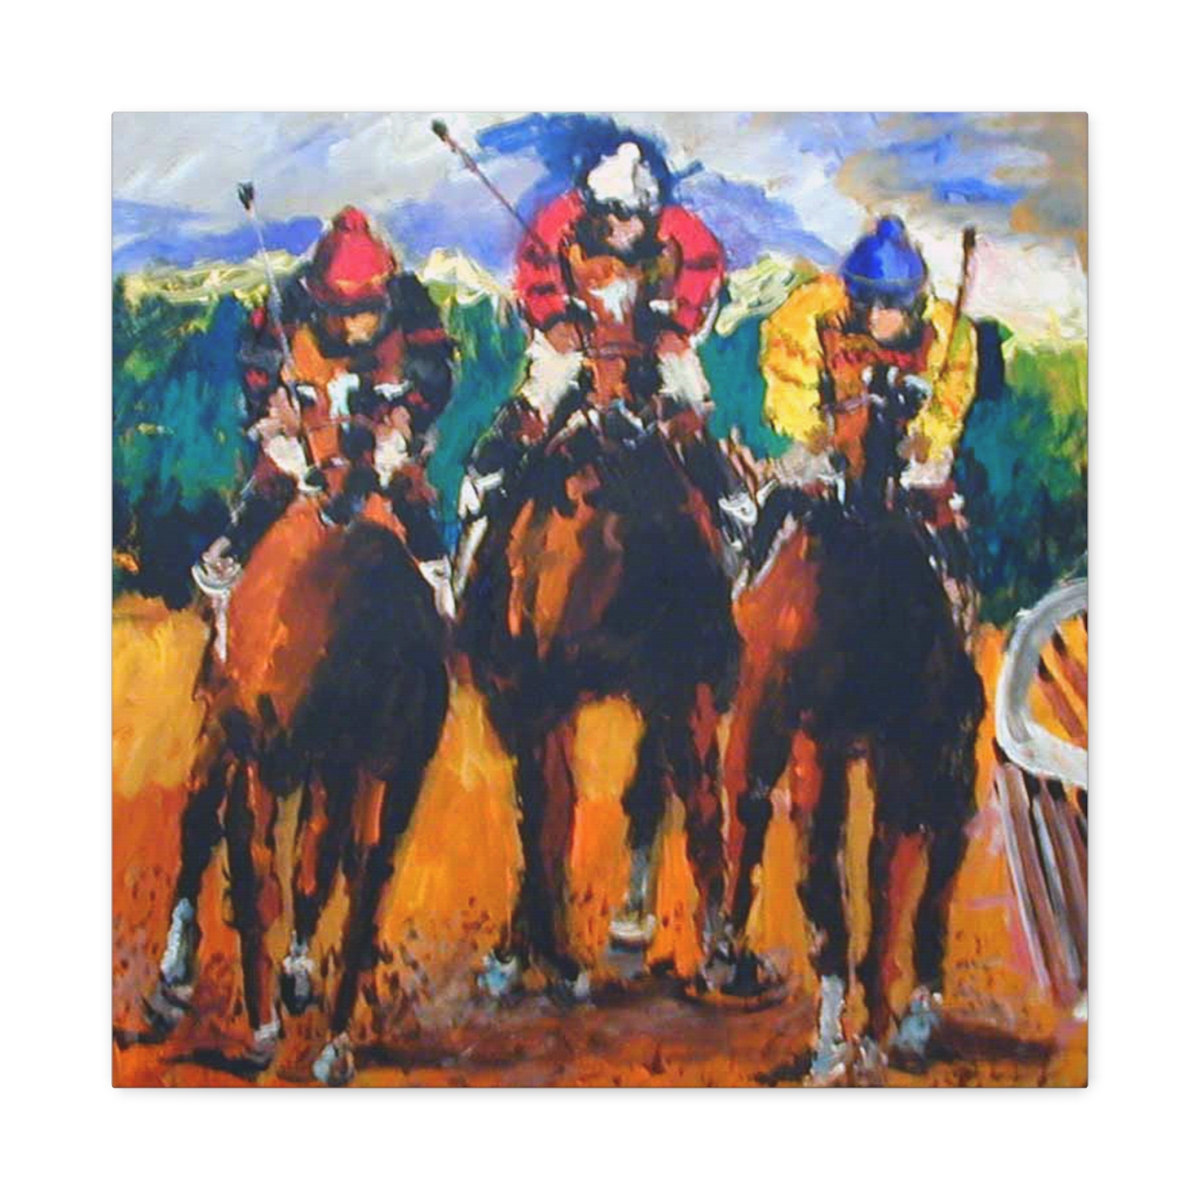 Horse Racing in Every Stroke: Joe Wilder's Horse Canvas Wall Art Odyssey